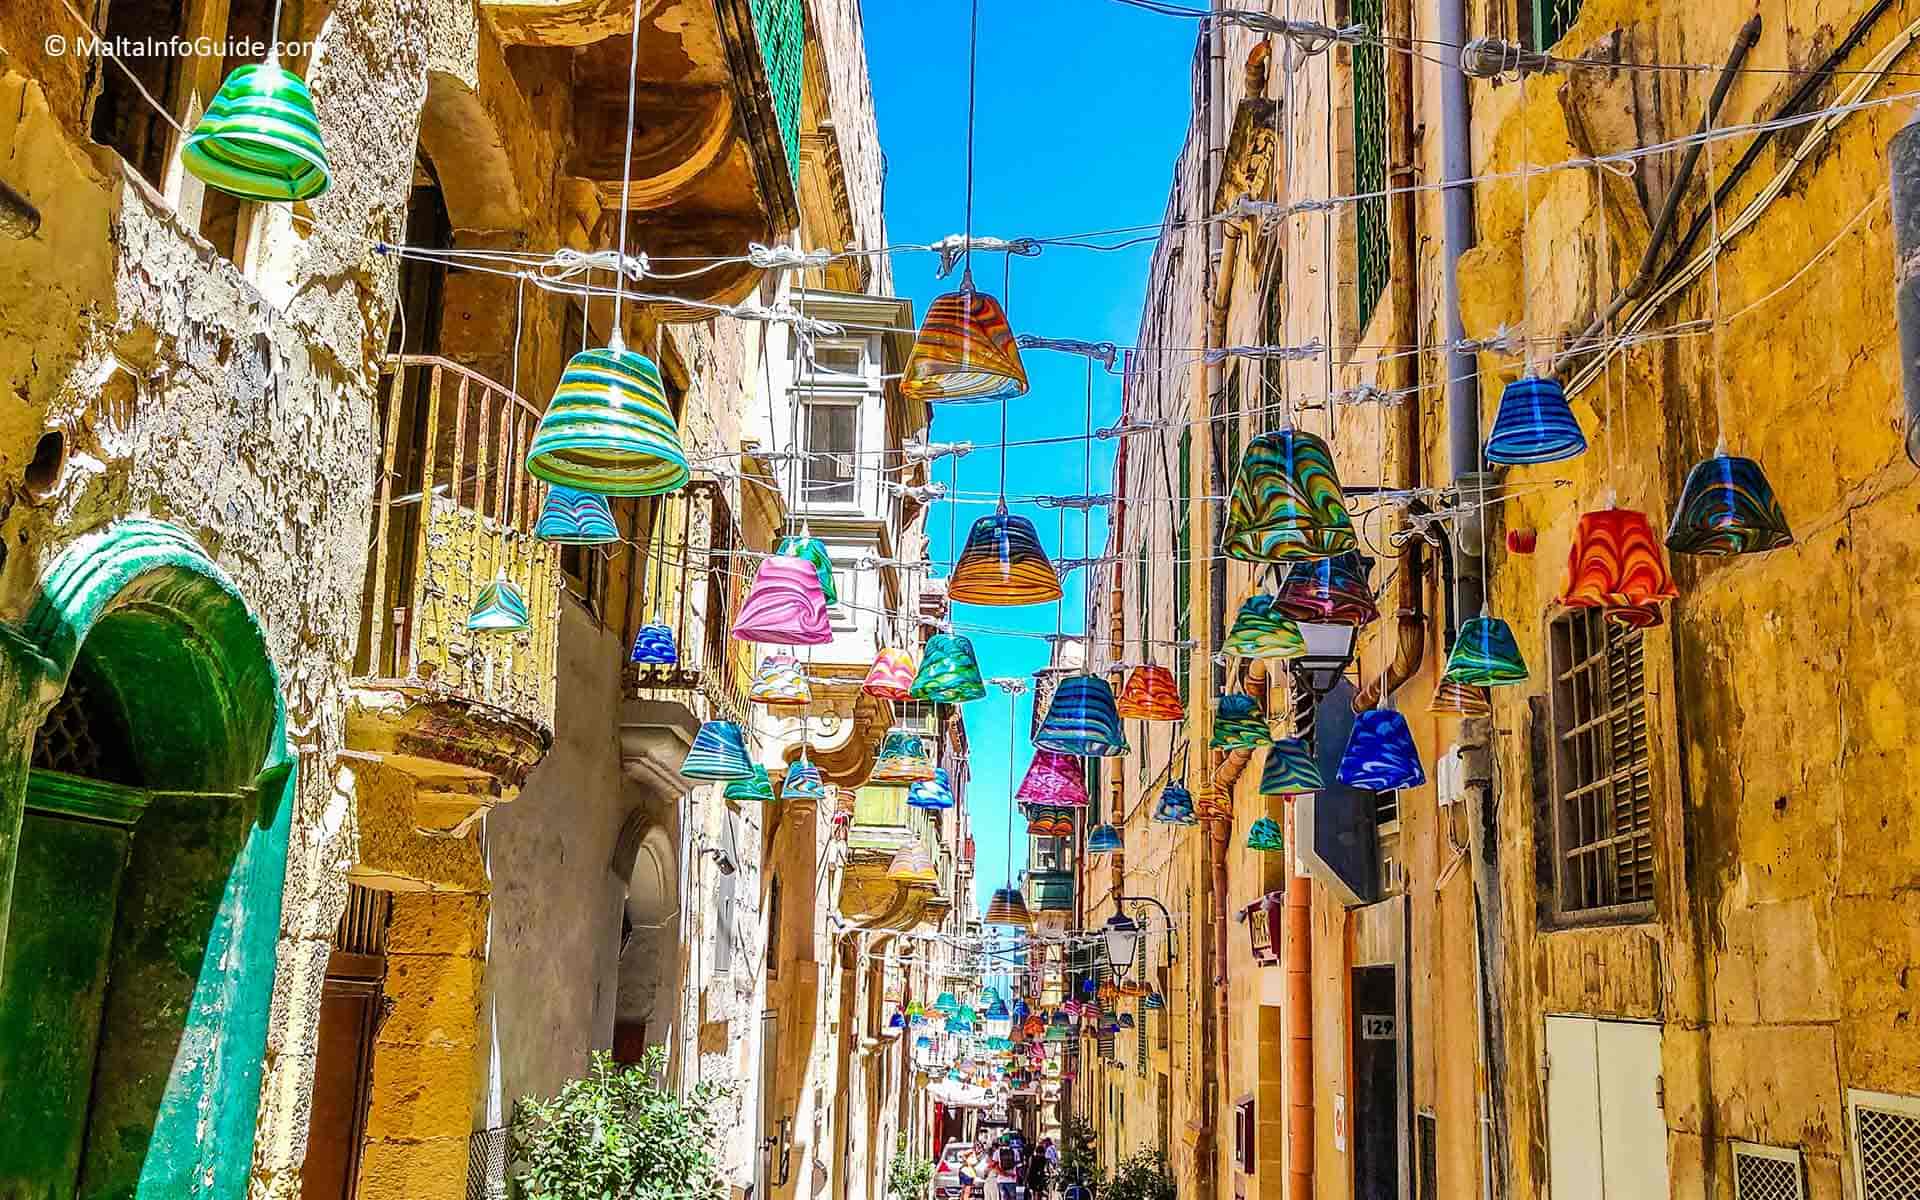 A decorated street in Valletta